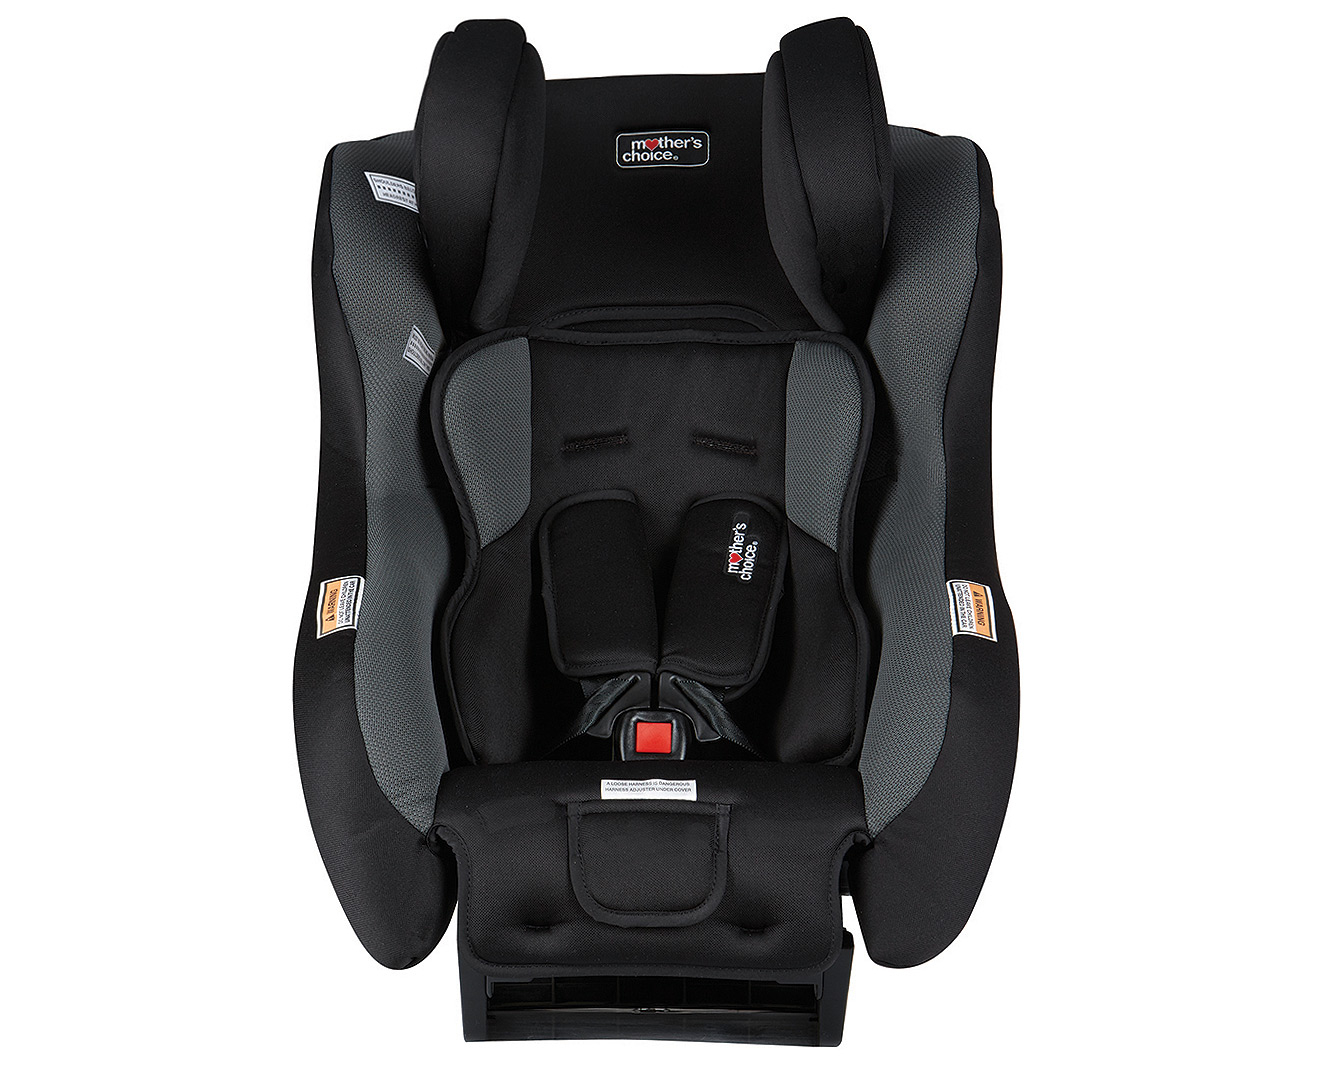 Mother's Choice Avoro Convertible Car Seat - Black/Grey